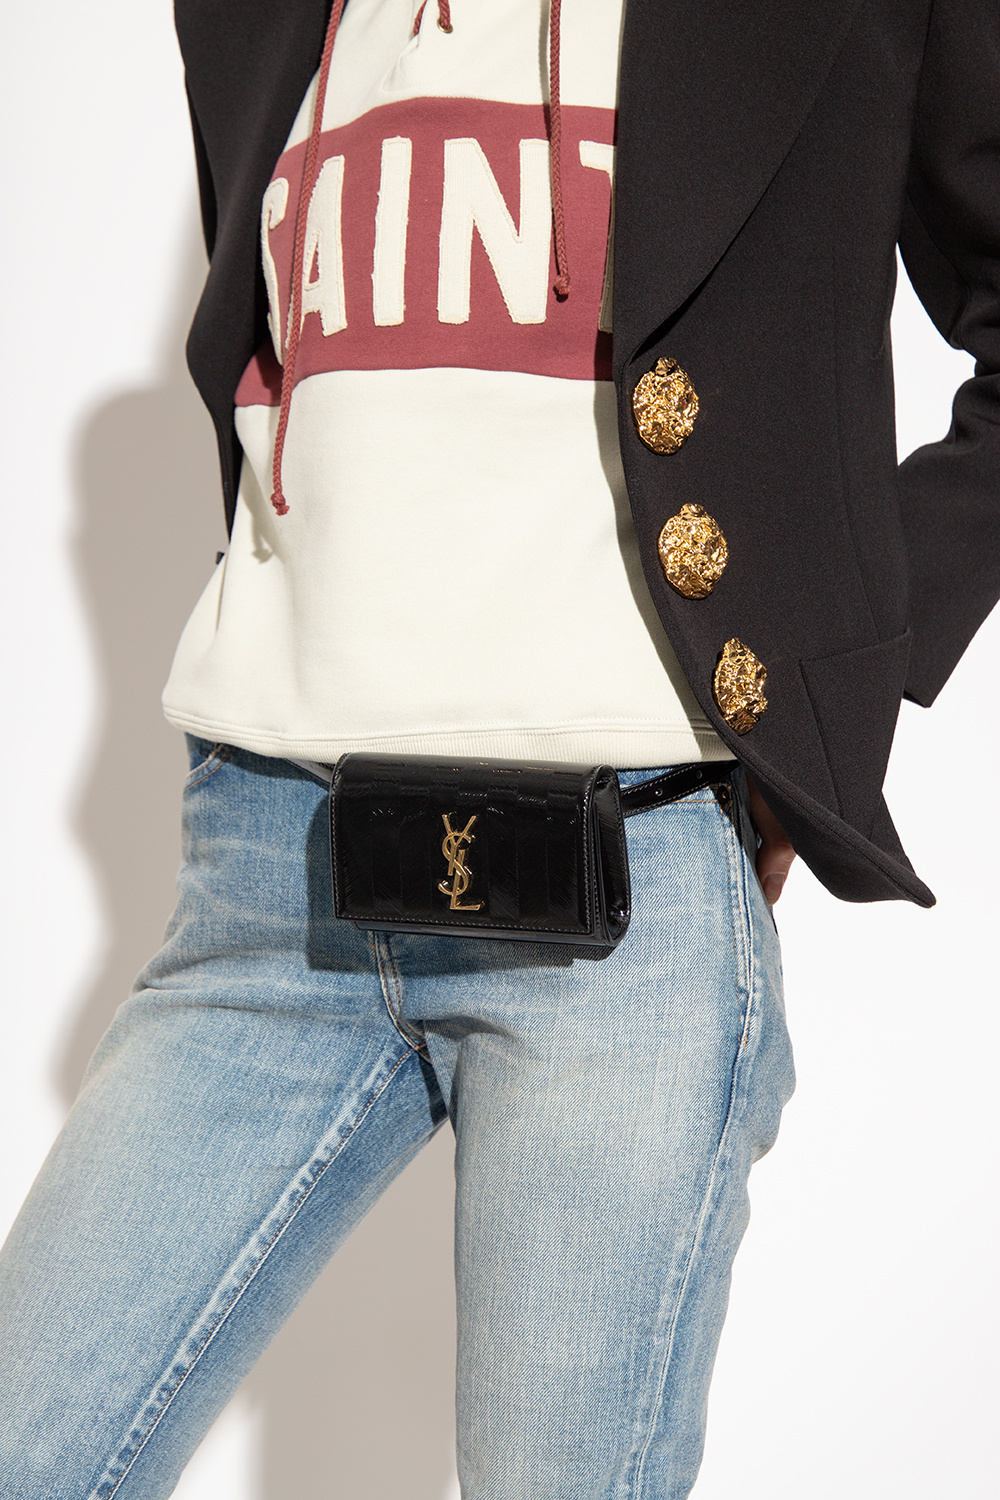 Ysl Saint Laurent woman Lou waist belt bag  Ysl belt bag, Street style bags,  Ysl belt